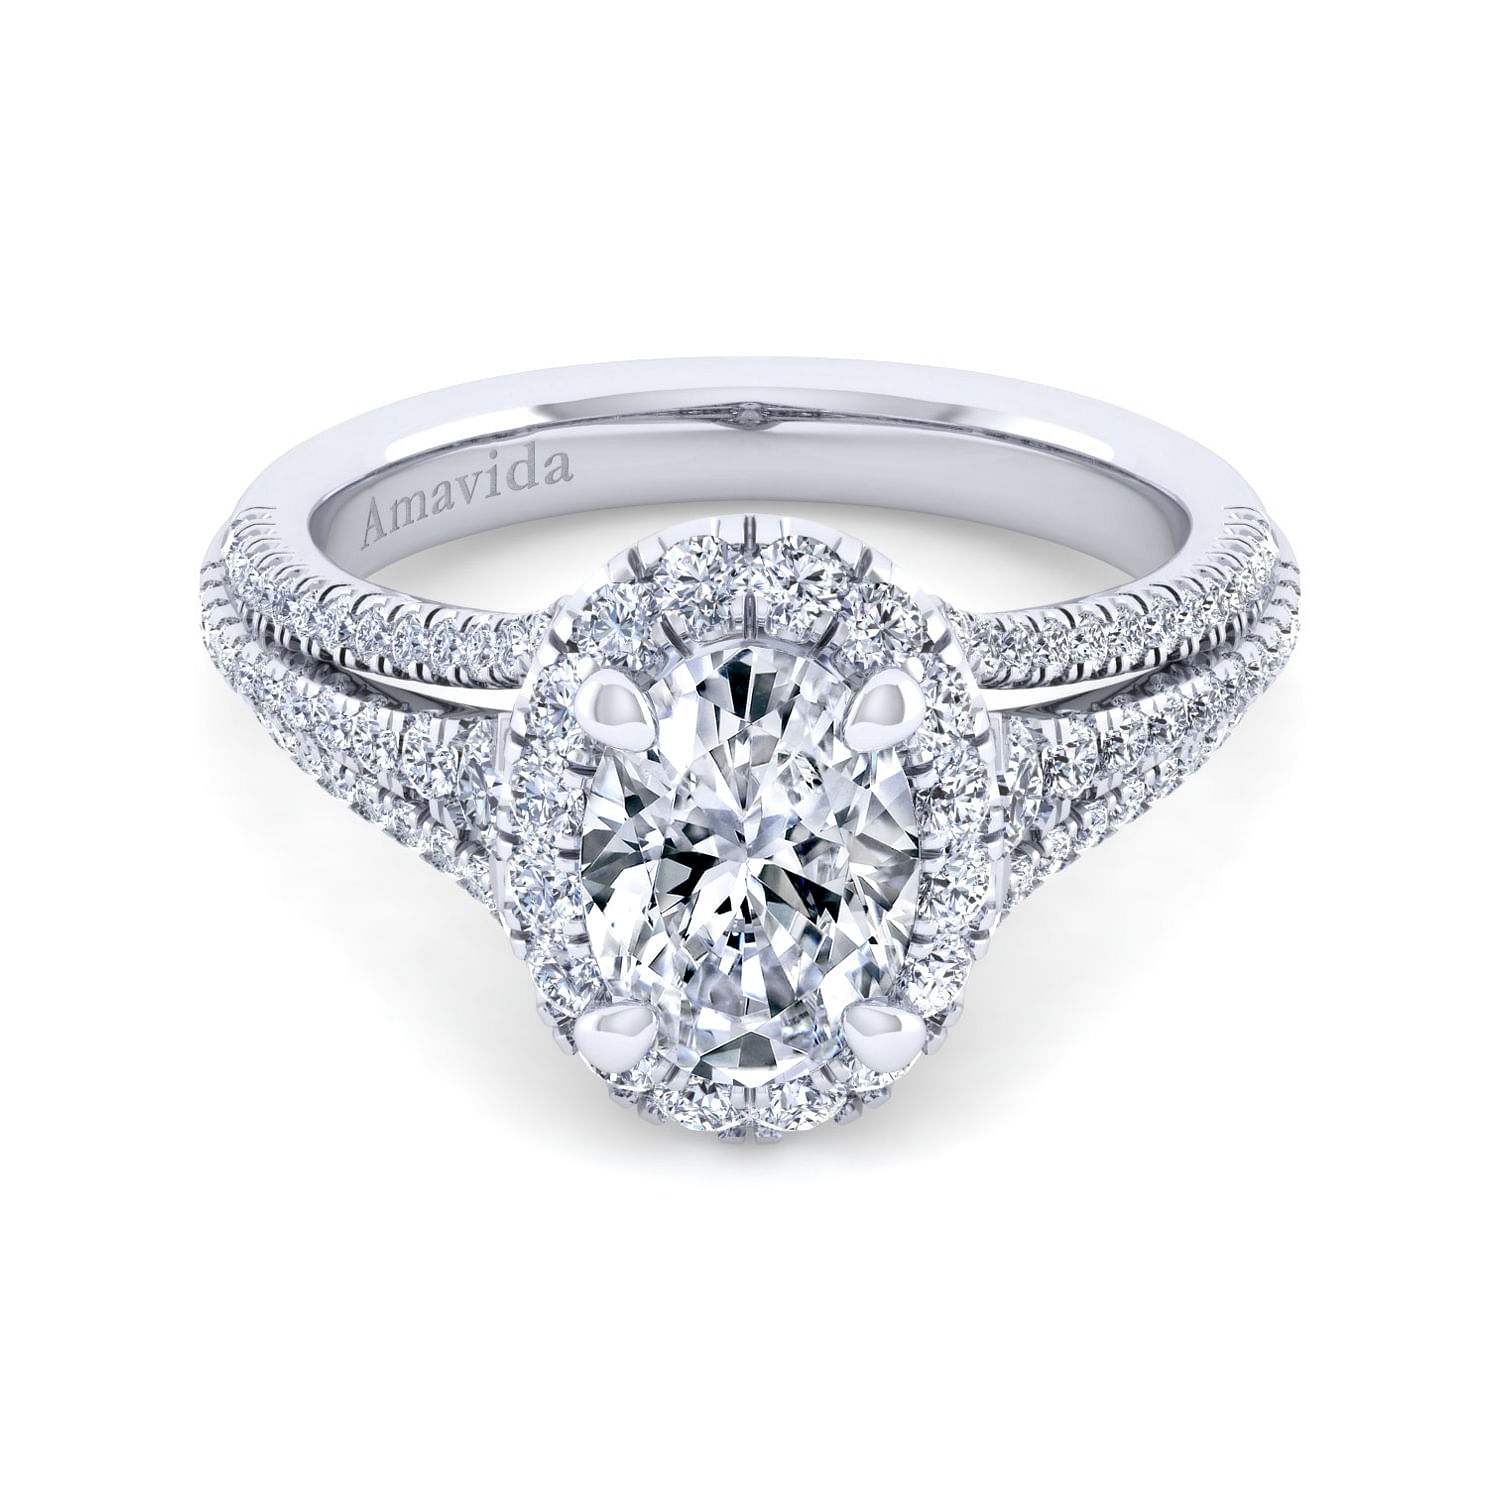 Gramercy - 18K White Gold Oval Halo Diamond Engagement Ring